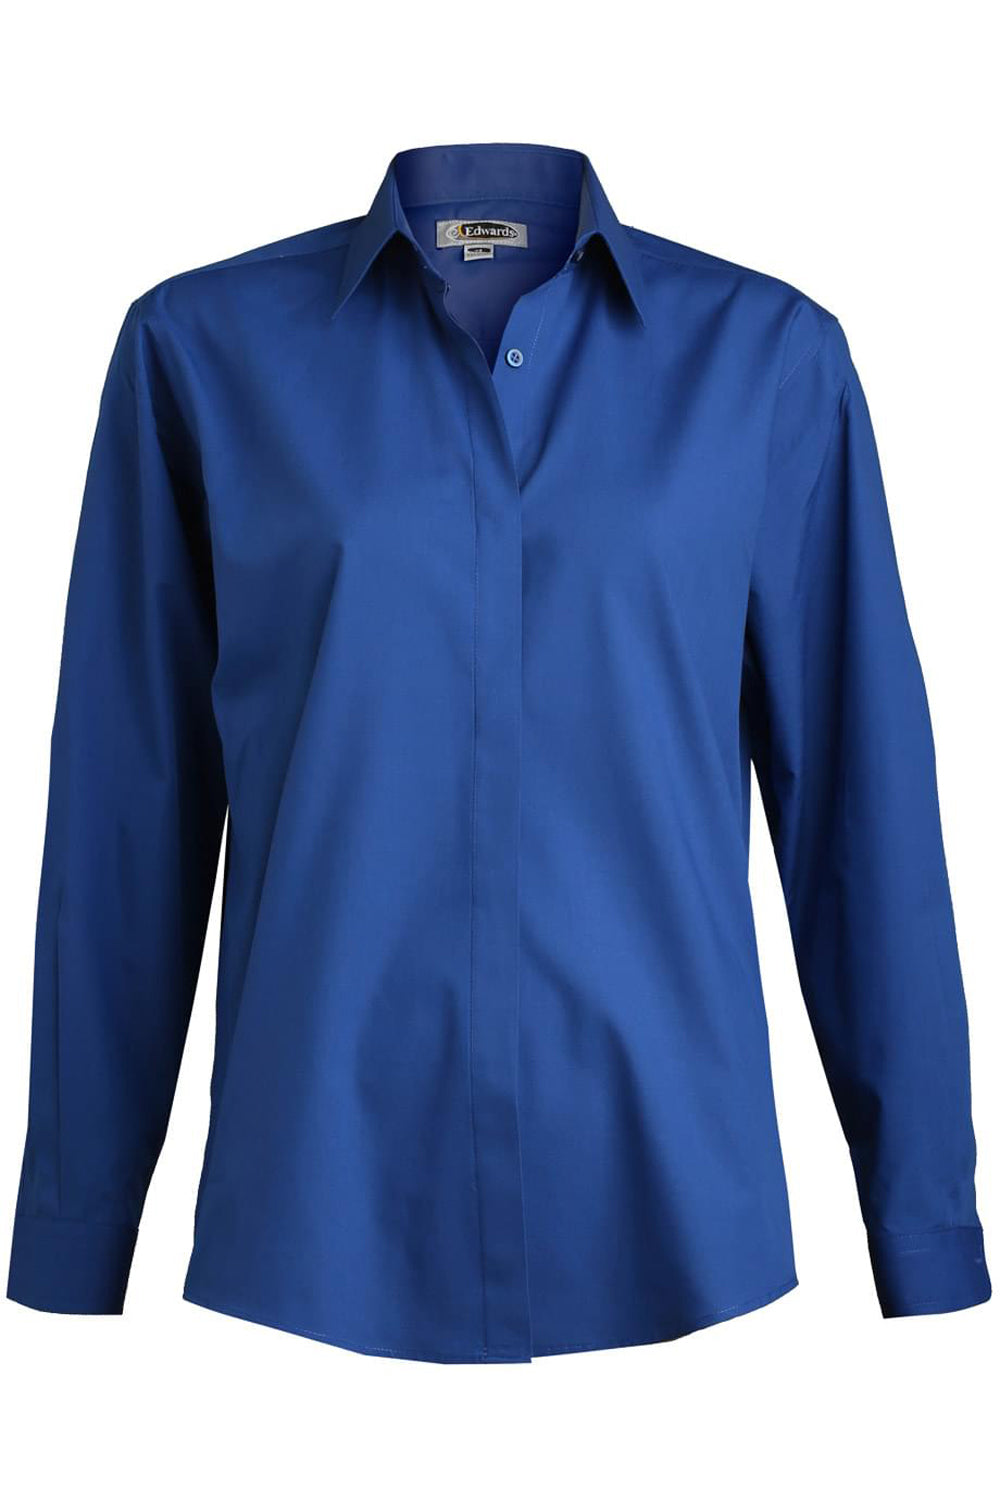 Edwards XXS Ladies' Café Broadcloth Shirt - Royal Blue